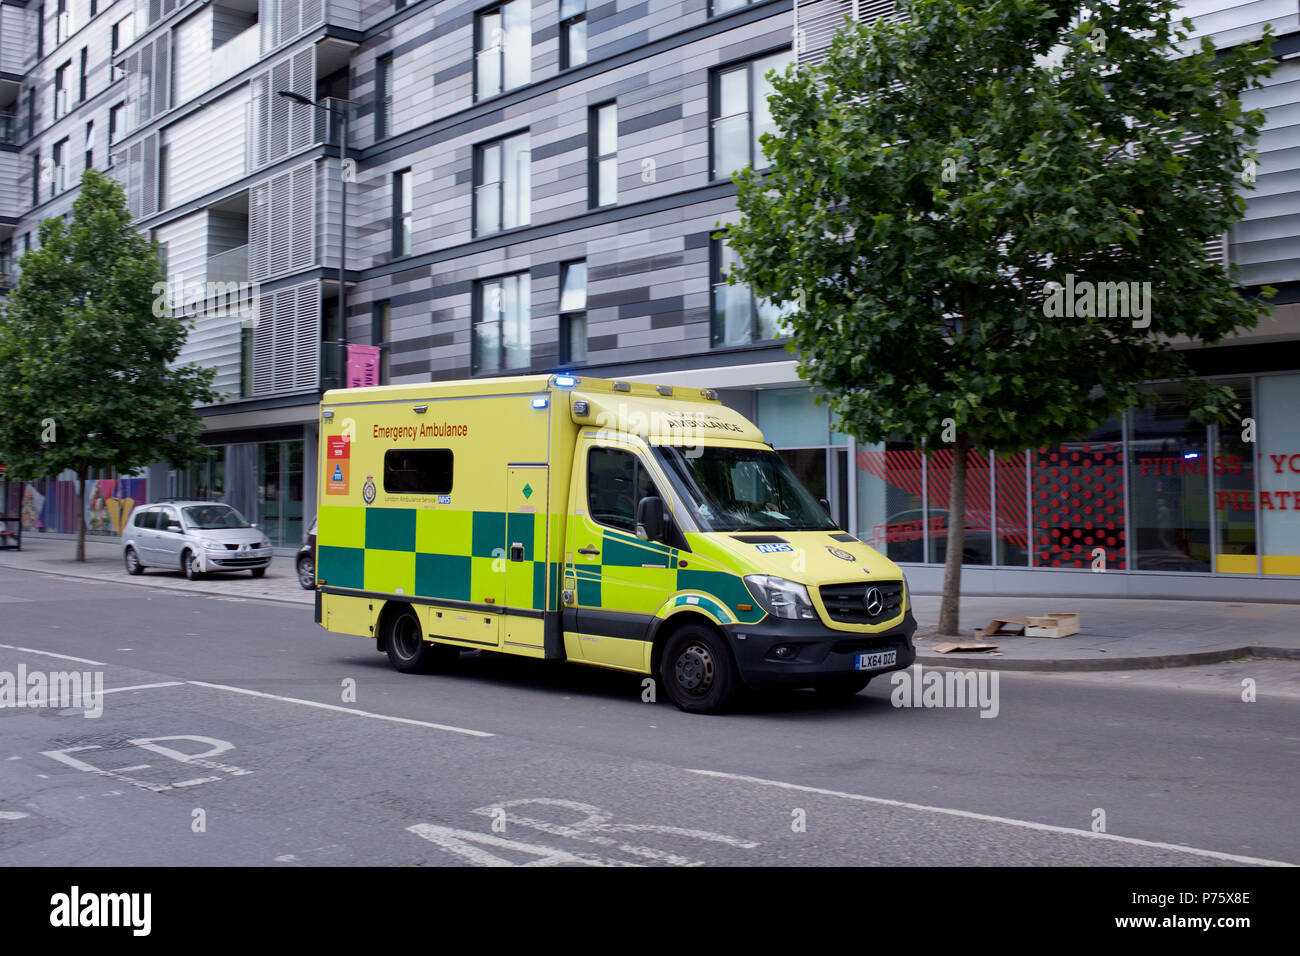 Ambulance on an emergency call in York Way, Kings Cross in London Stock Photo